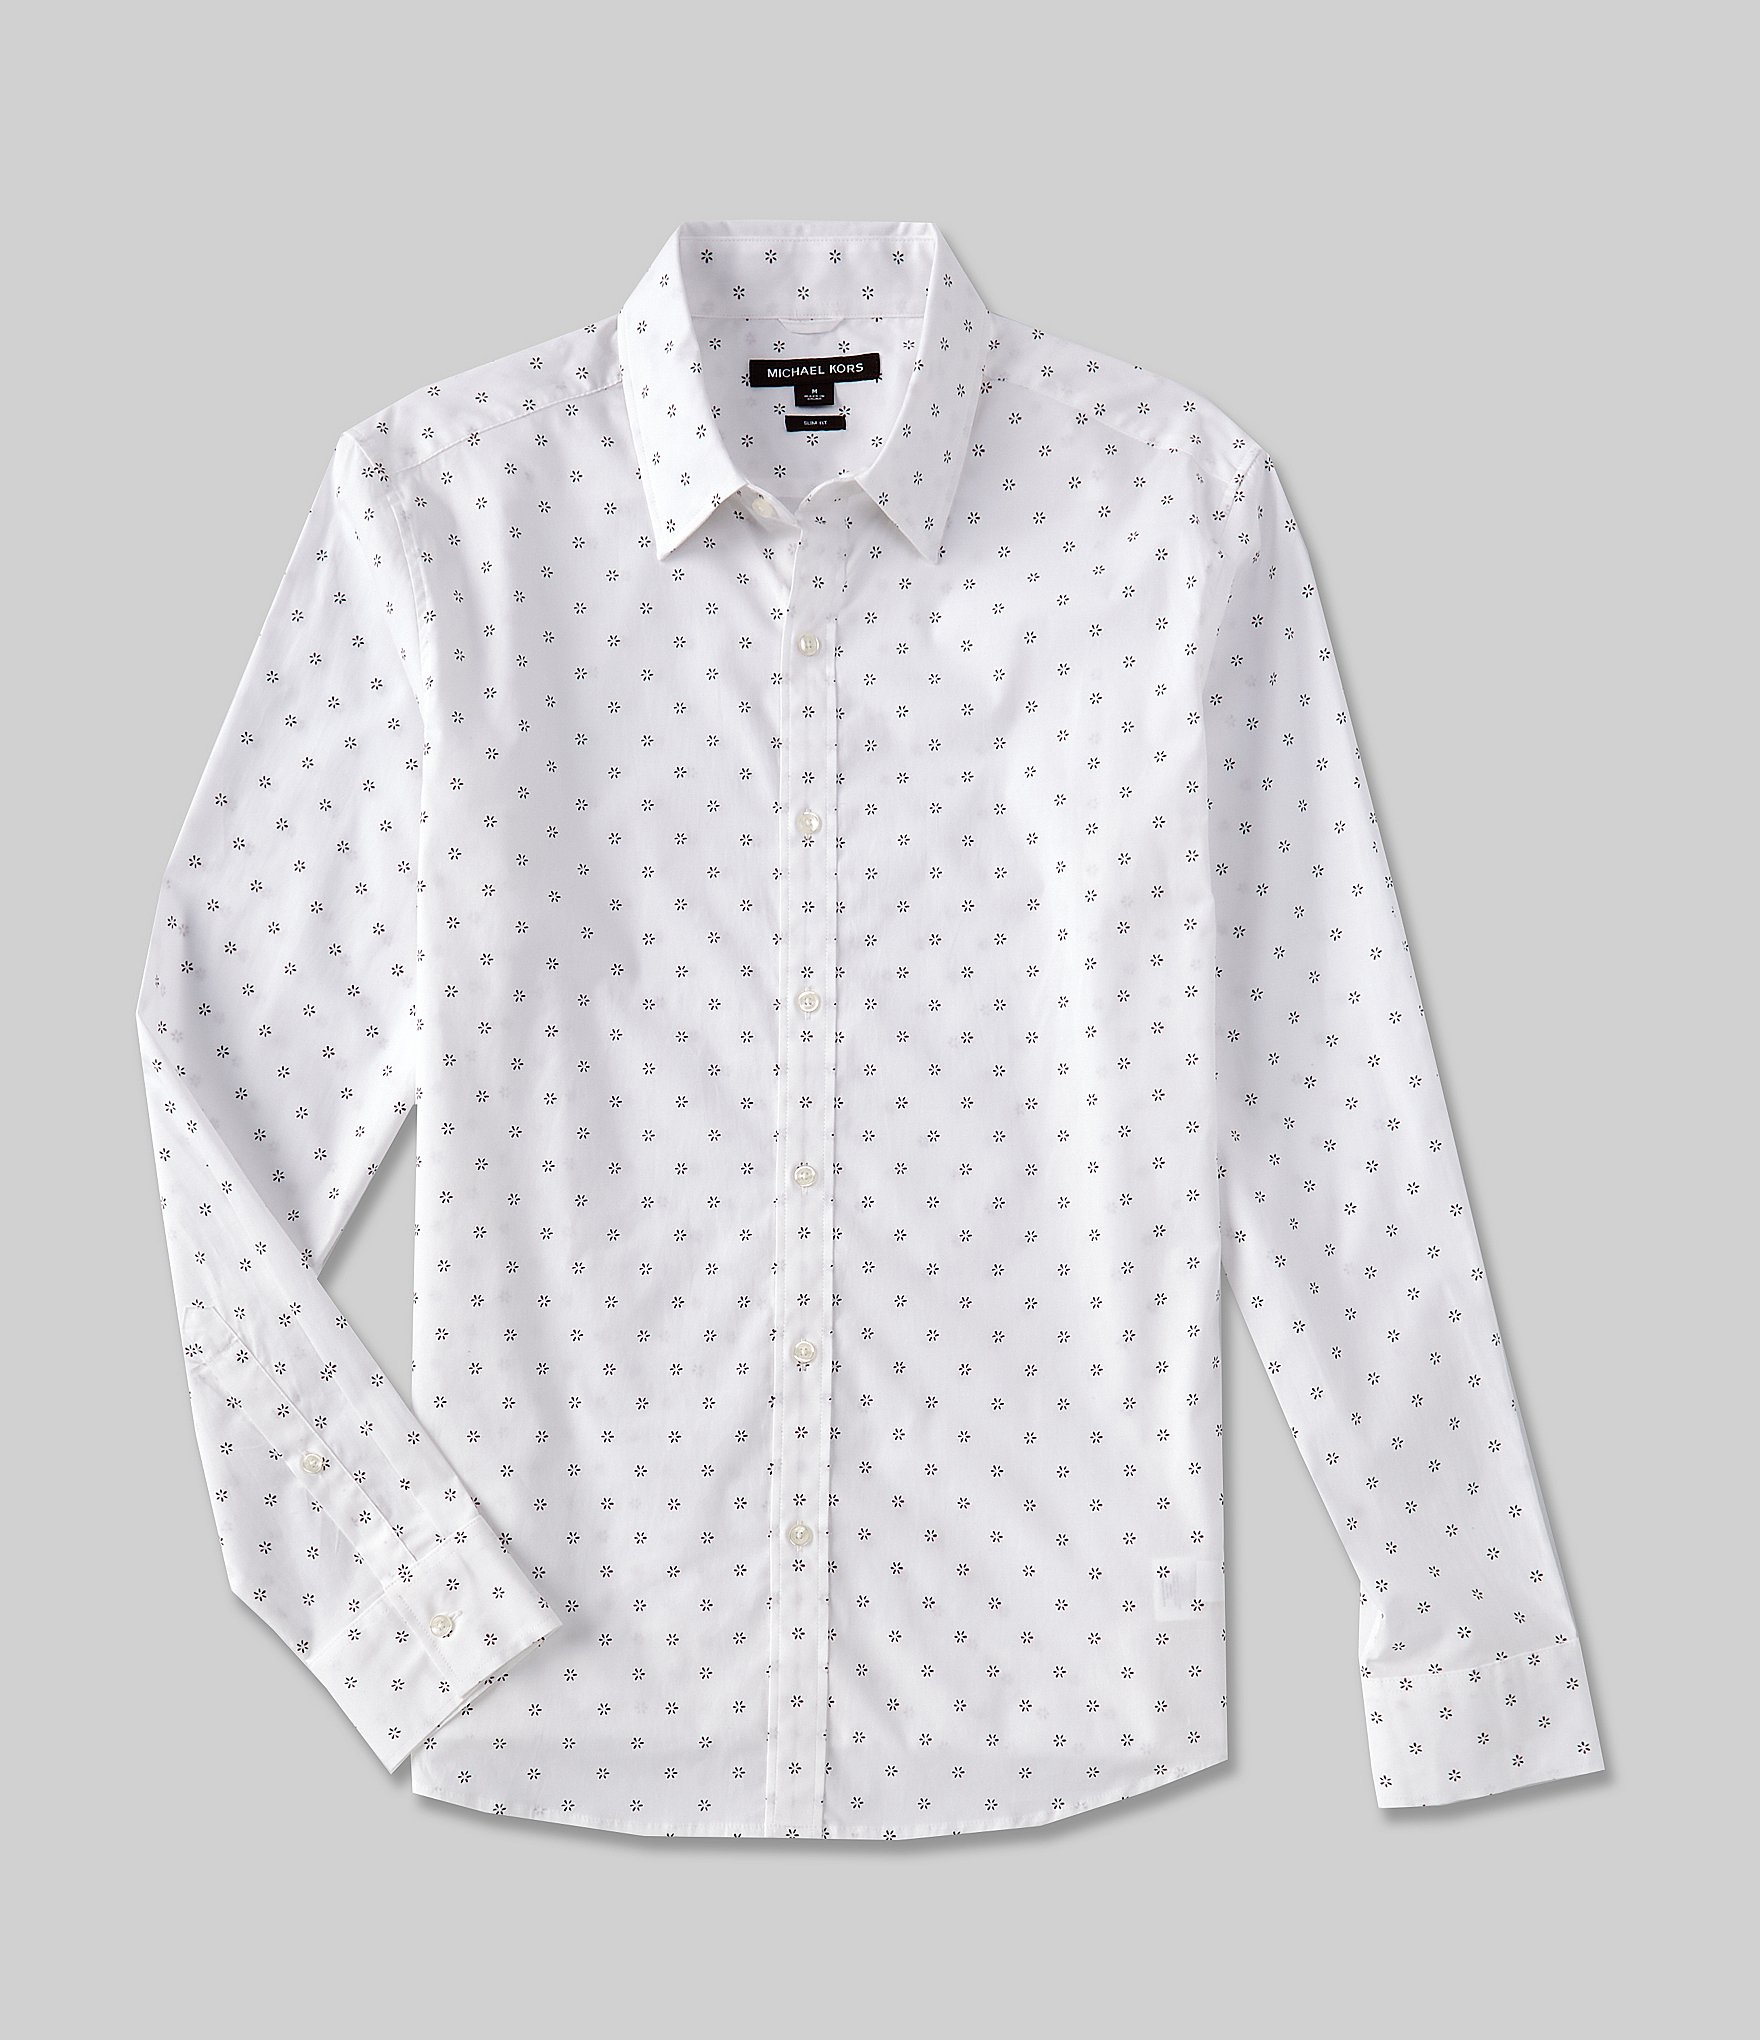 MICHAEL KORS WHITE POLO SHIRT Mens Fashion Tops  Sets Tshirts  Polo  Shirts on Carousell